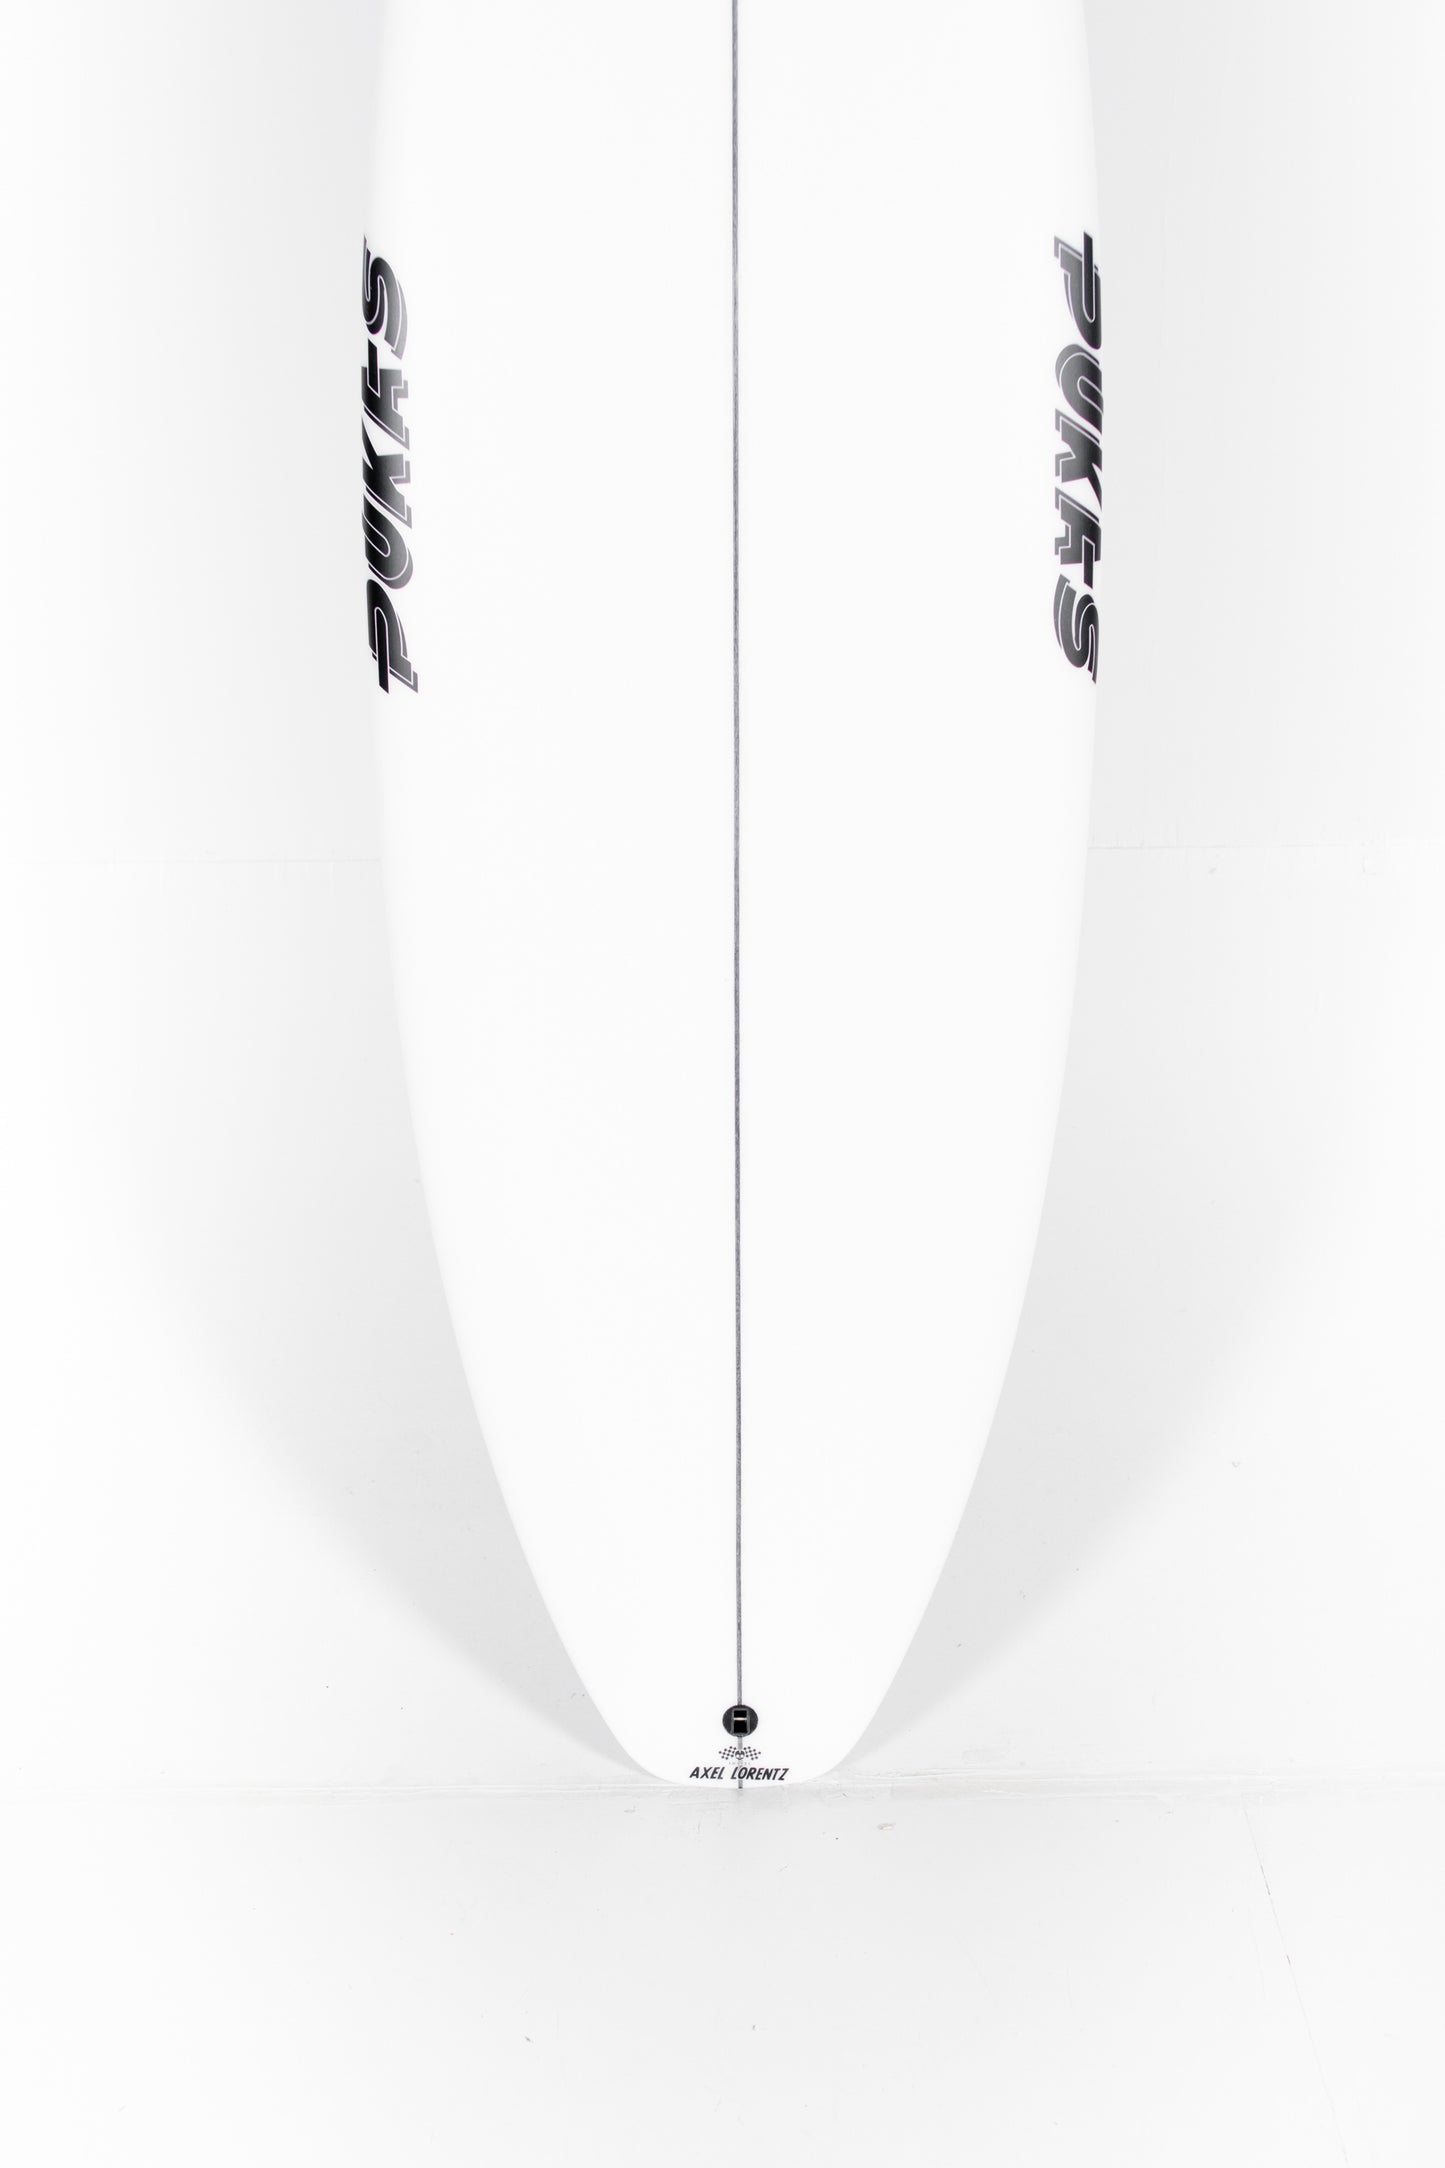 
                  
                    Pukas Surf Shop - Pukas Surfboard - DARKER by Axel Lorentz - 6'1" x 19,63 x 2,4 x 30,67L. - AX06228
                  
                